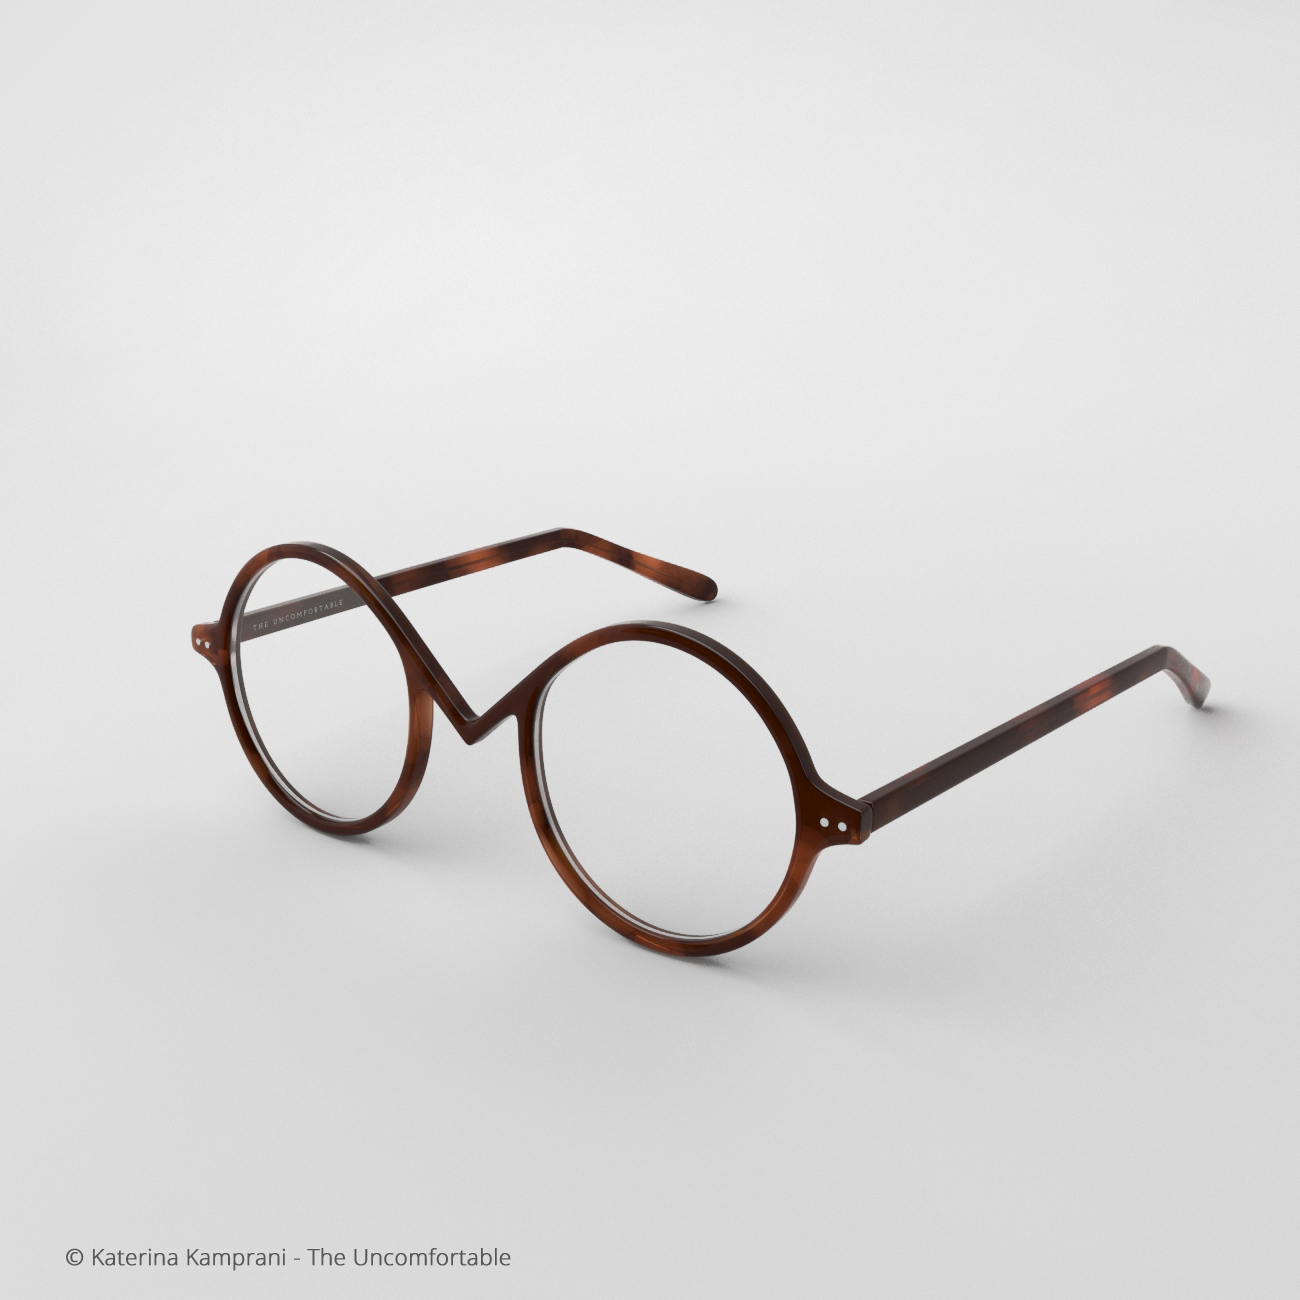 Uncomfortable-glasses-02.jpg